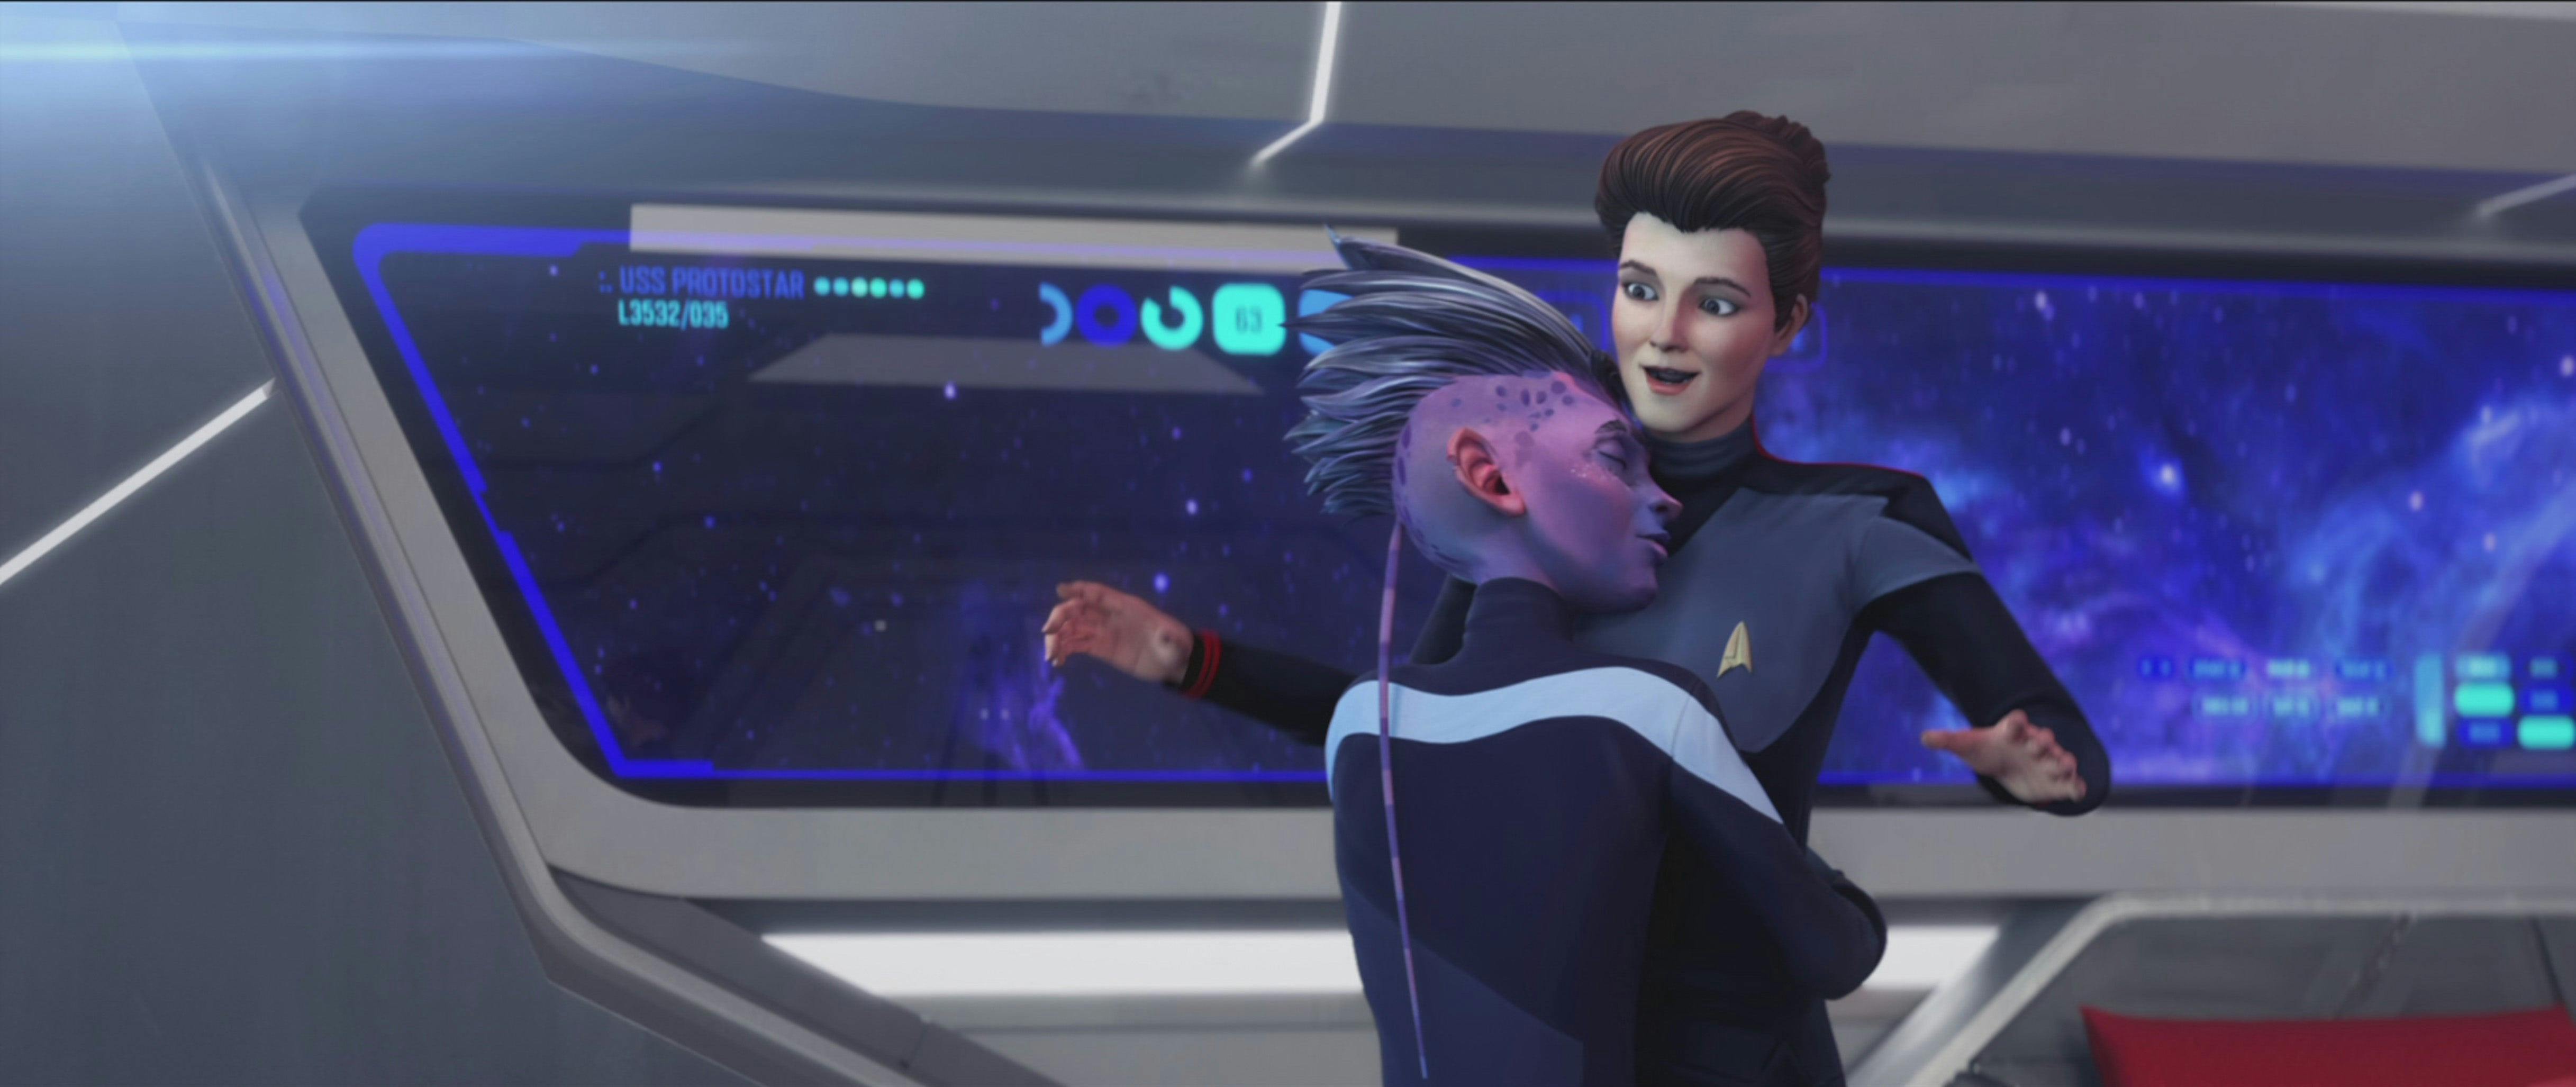 Dal hugs a shocked Holo-Janeway aboard the Protostar in Star Trek: Prodigy